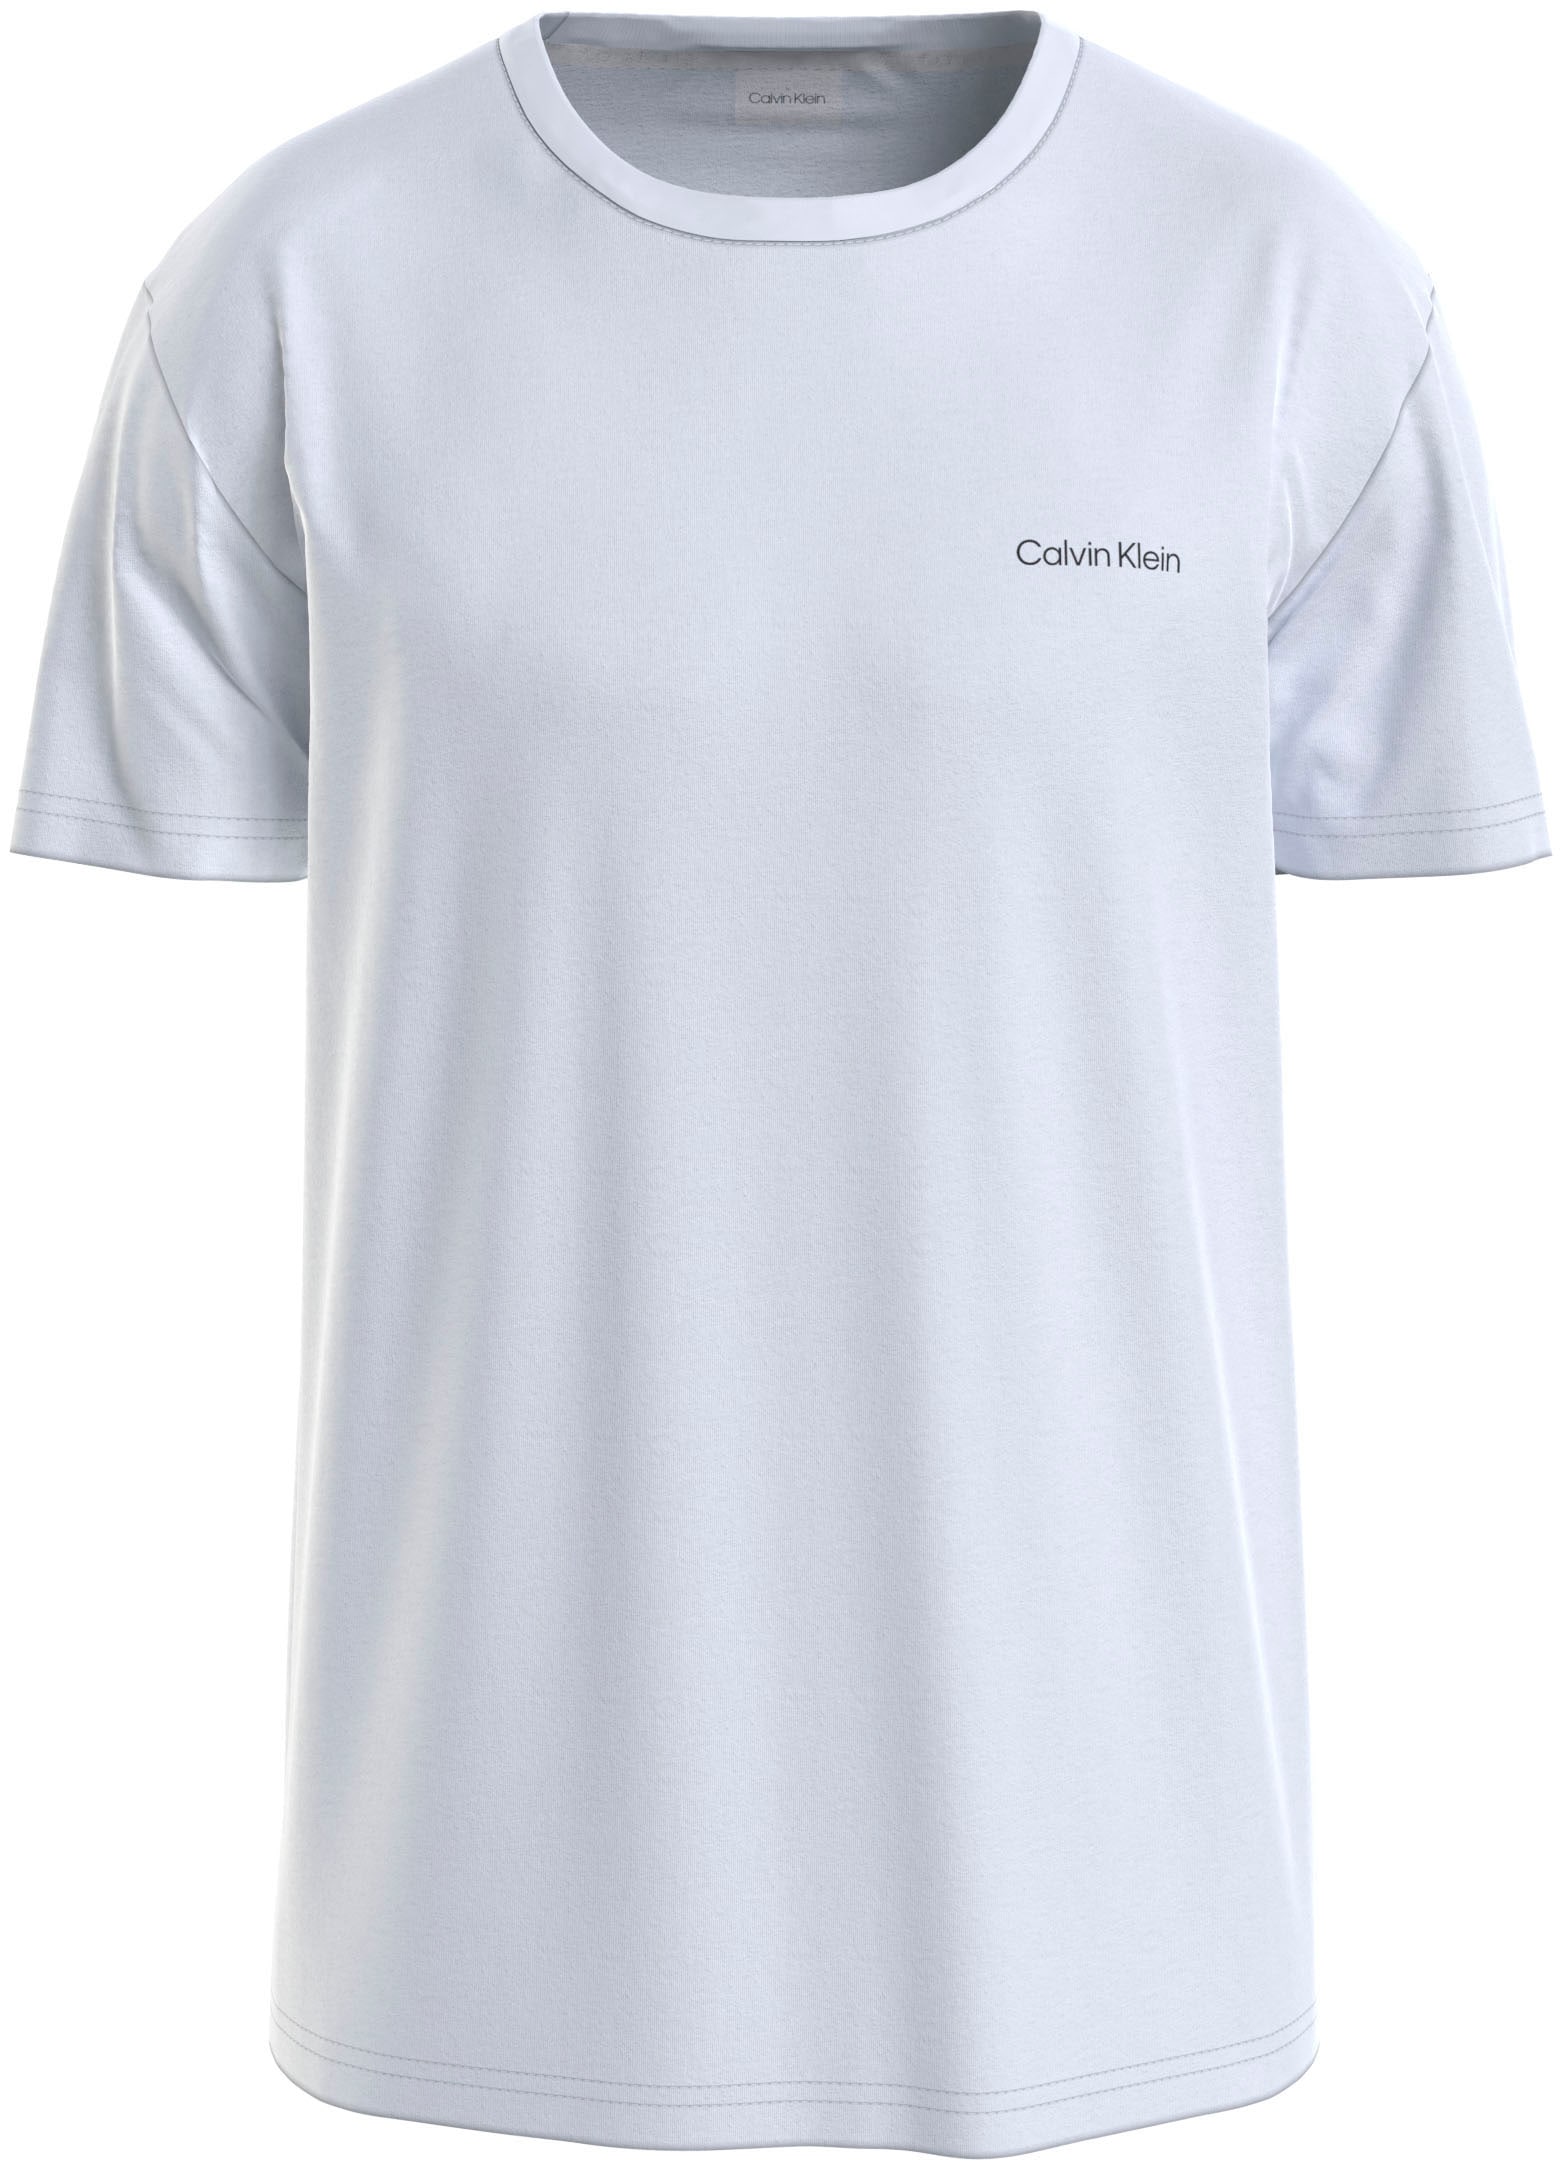 shoppen dickem Winterjersey Logo«, bei T-Shirt aus Klein Calvin »Micro OTTO online